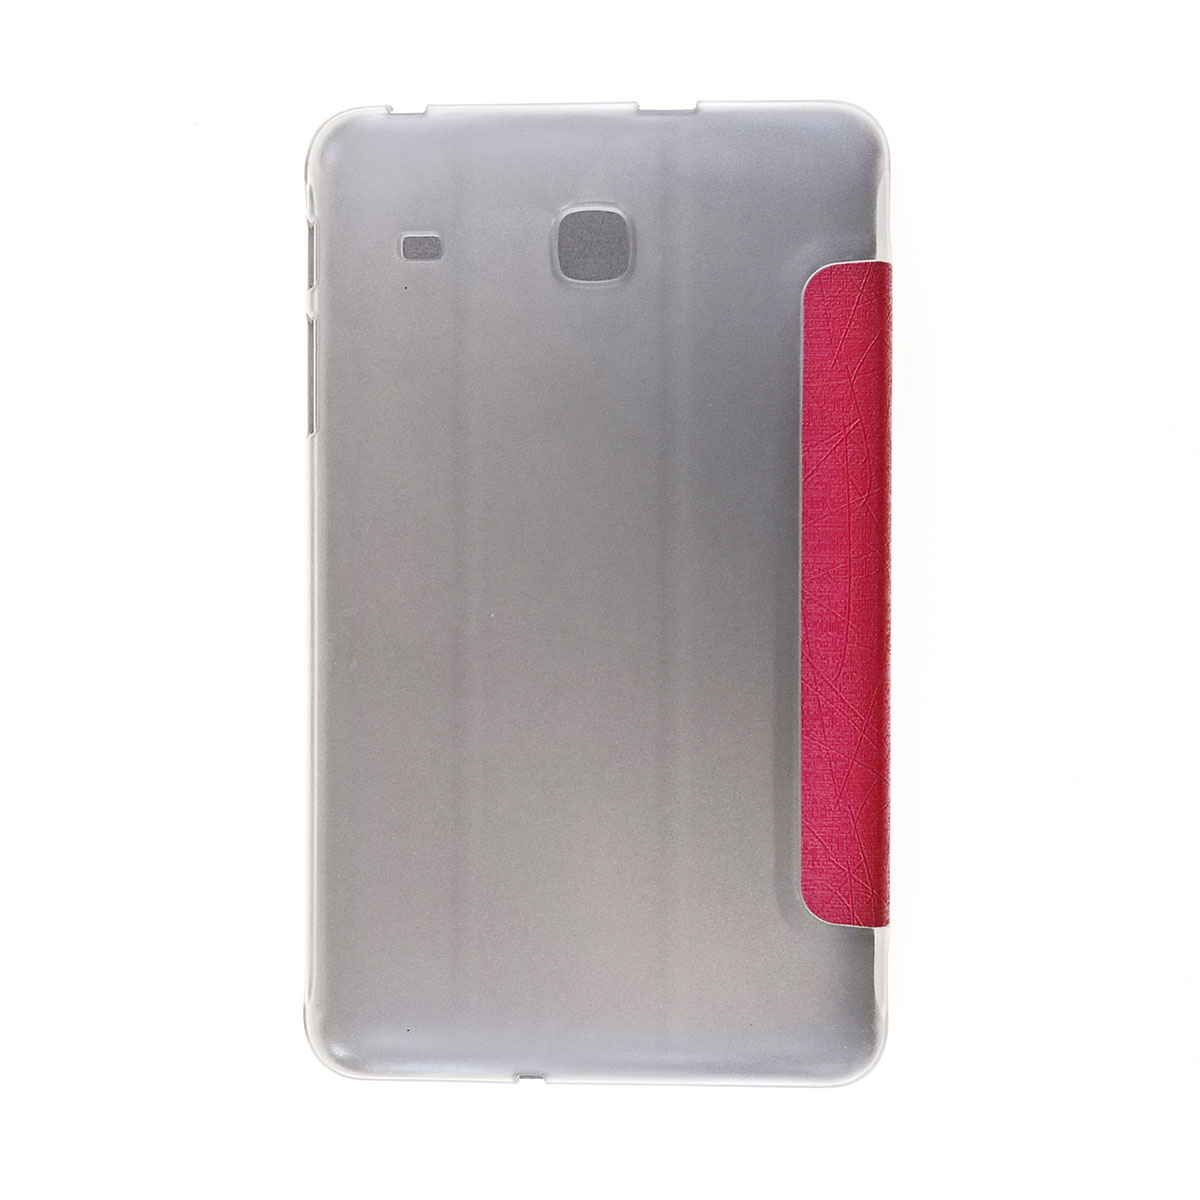 Чехол Folio Cover для SAMSUNG Galaxy Tab E 8.0 (SM-T377), цвет красный.